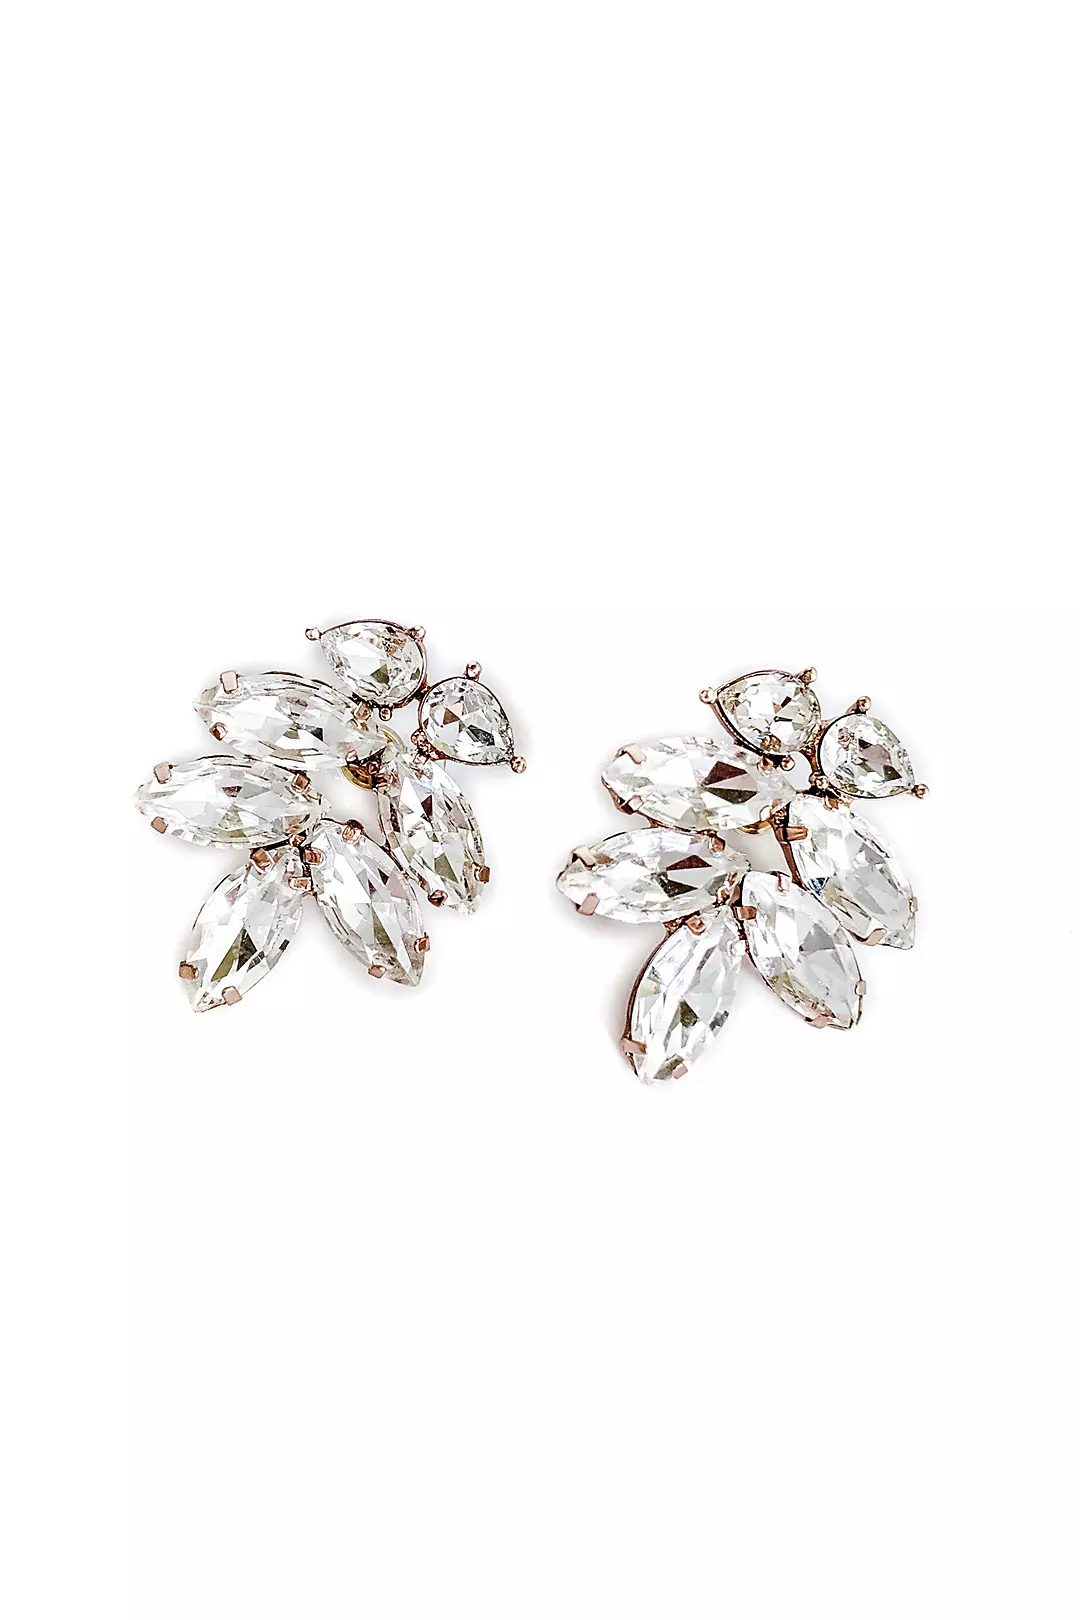 Swarovski Crystal and Sterling Leaf Earrings Image